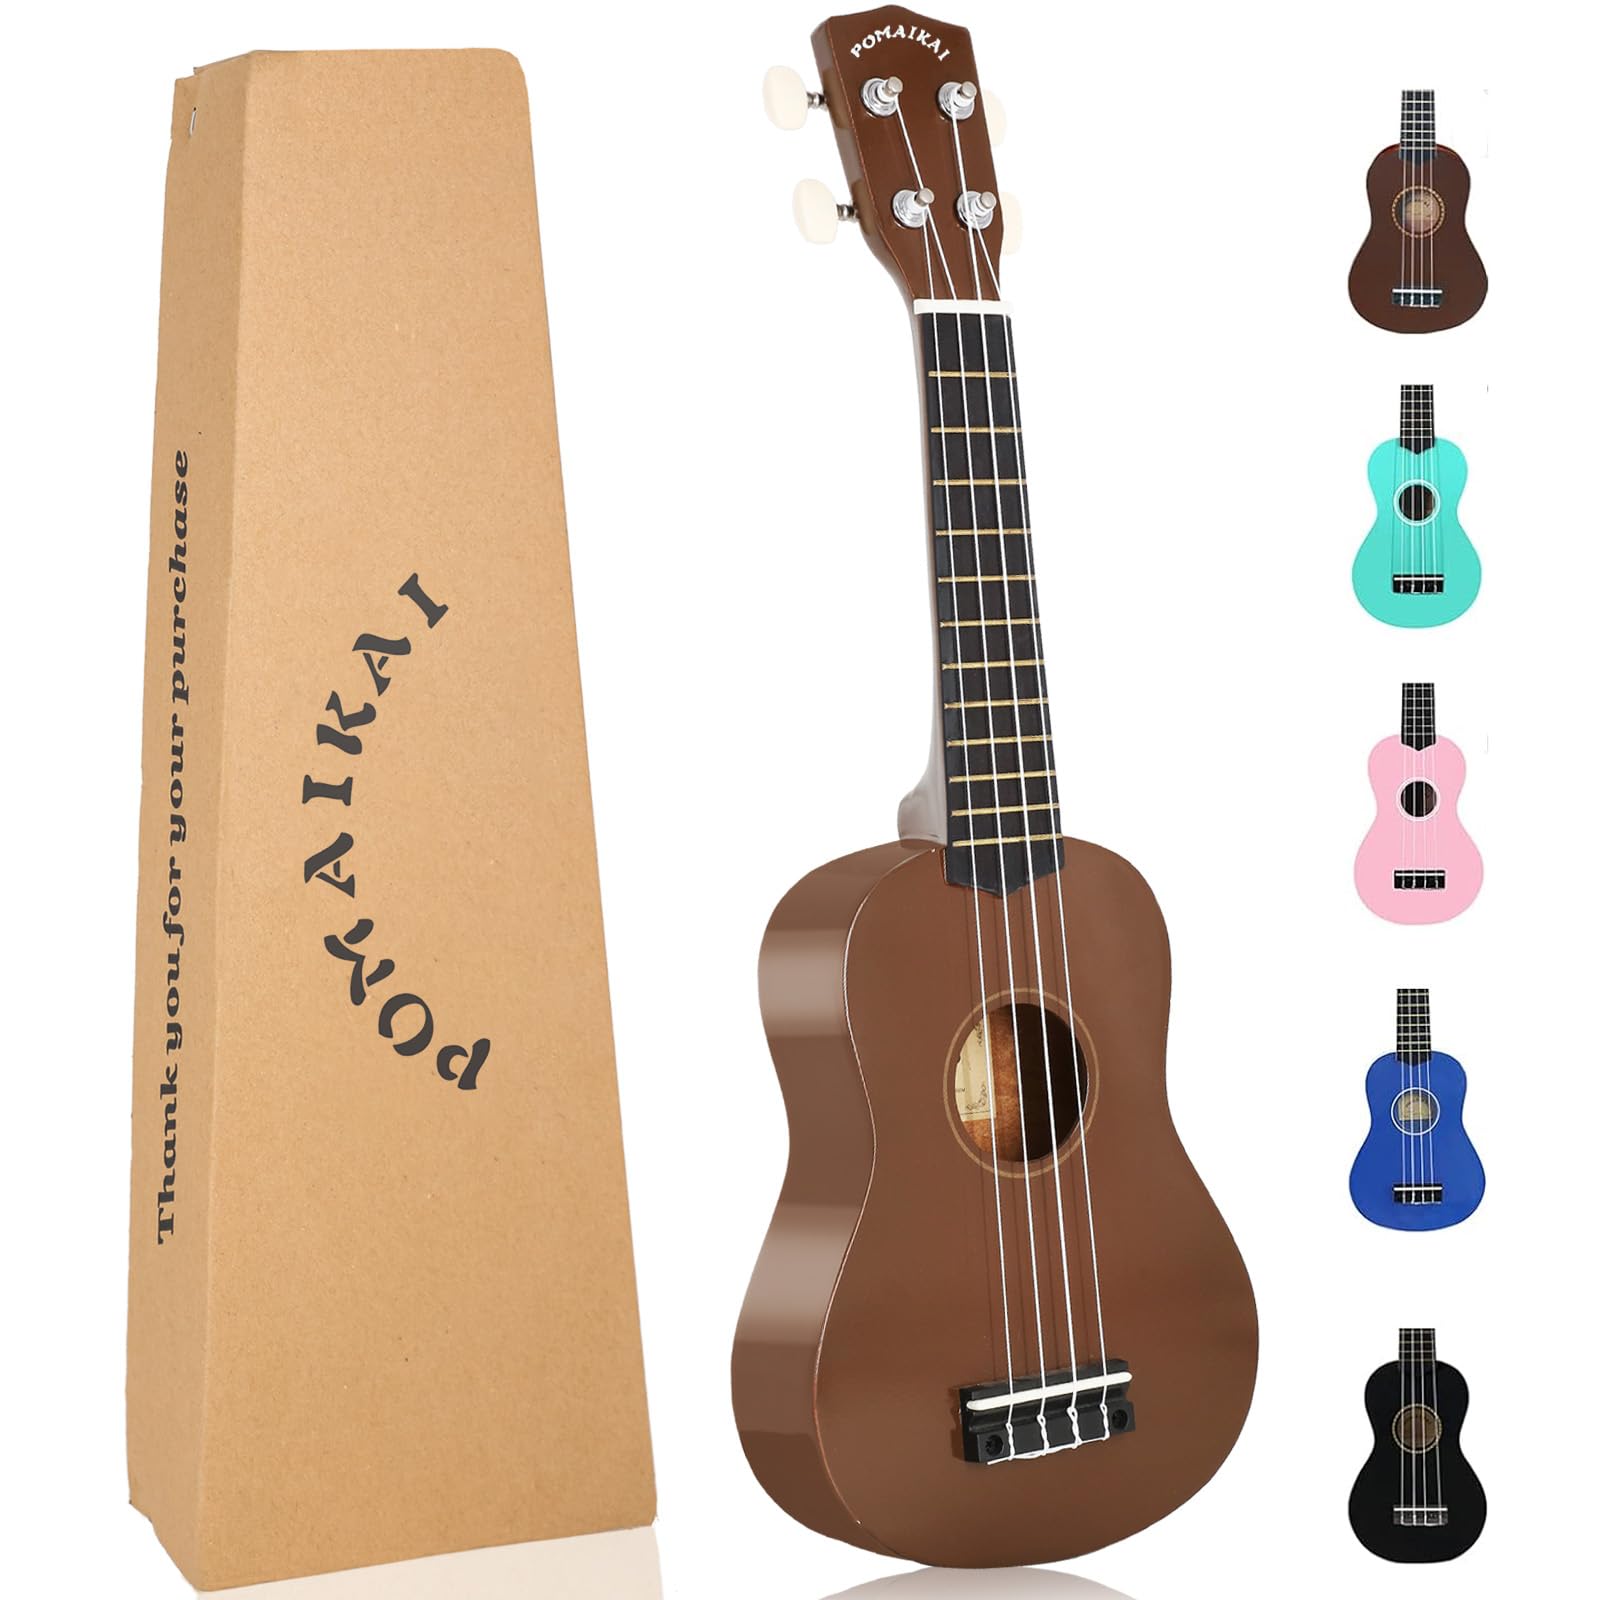 Pomaikai soprano ukulele for beginners guitars inch ukelele instrument for adults wood guitar small hawaiian ukalalee starter brown musical instruments